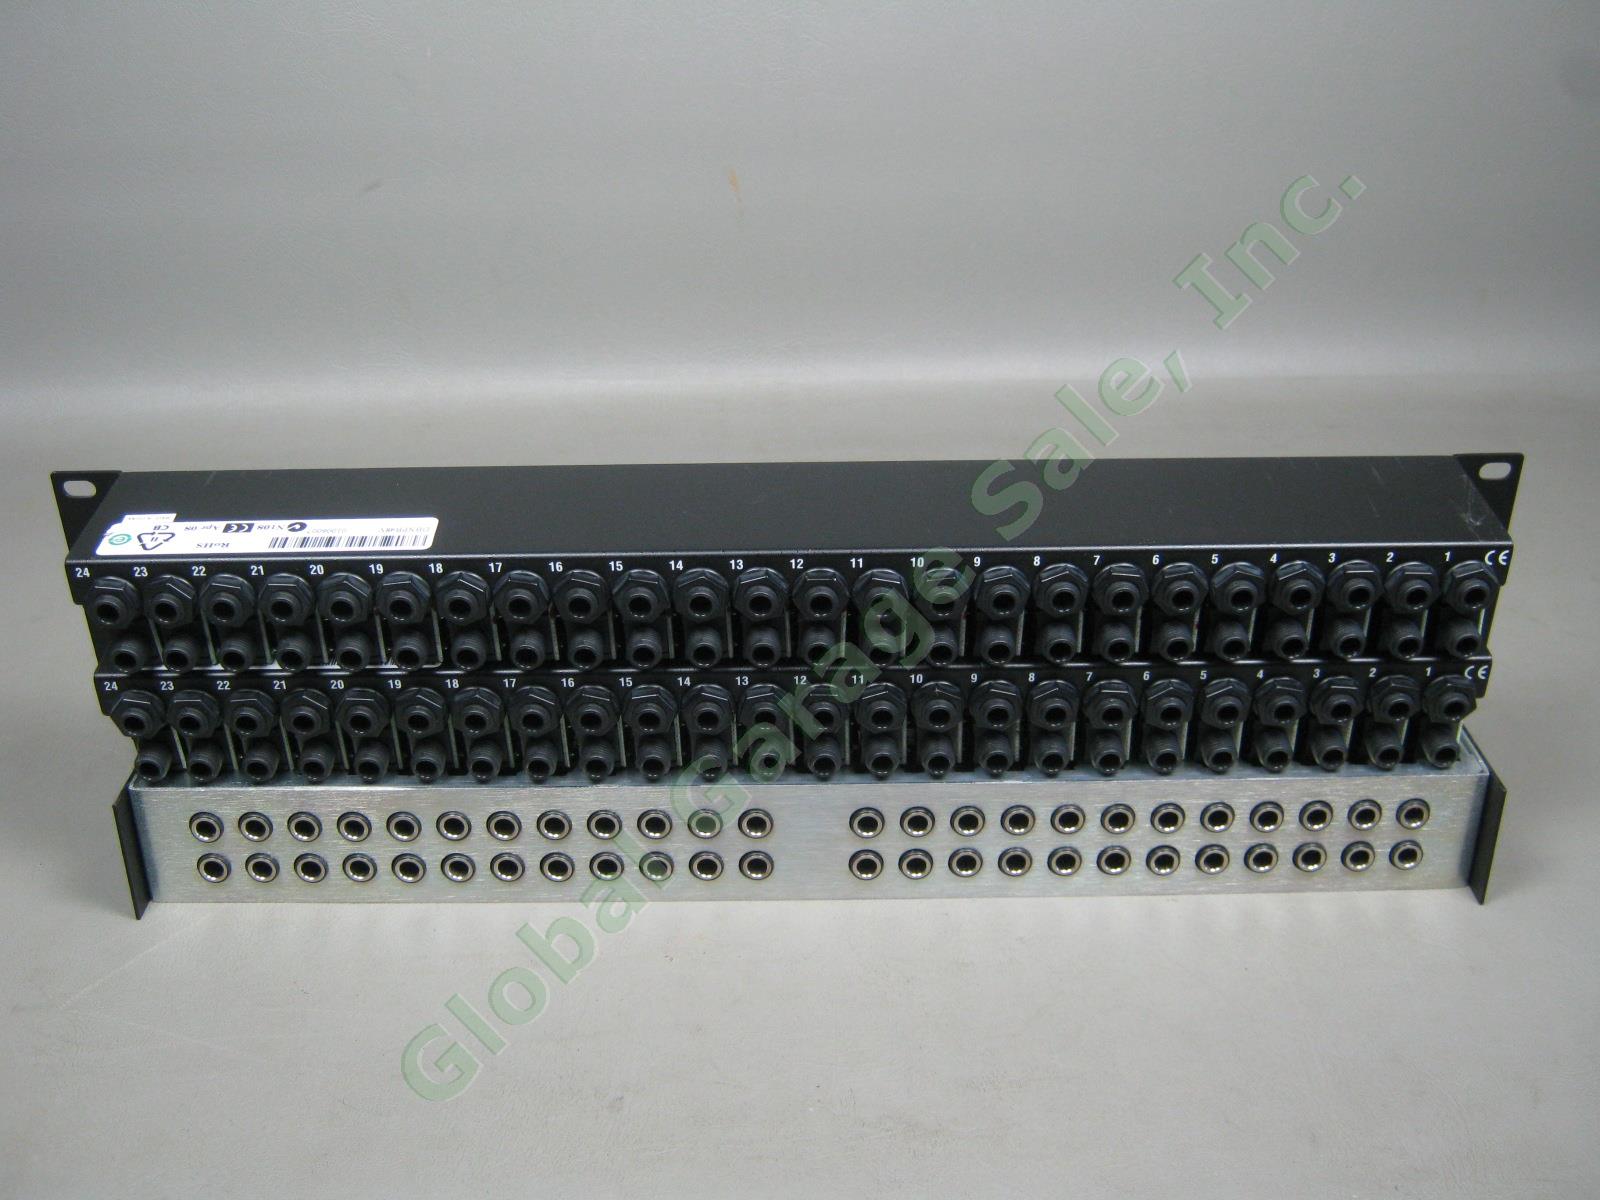 3x 48-Point 1/4" TRS Patch Bay Lot ProCo Patchmaster Series PM148 + 2x DBX PB-48 6